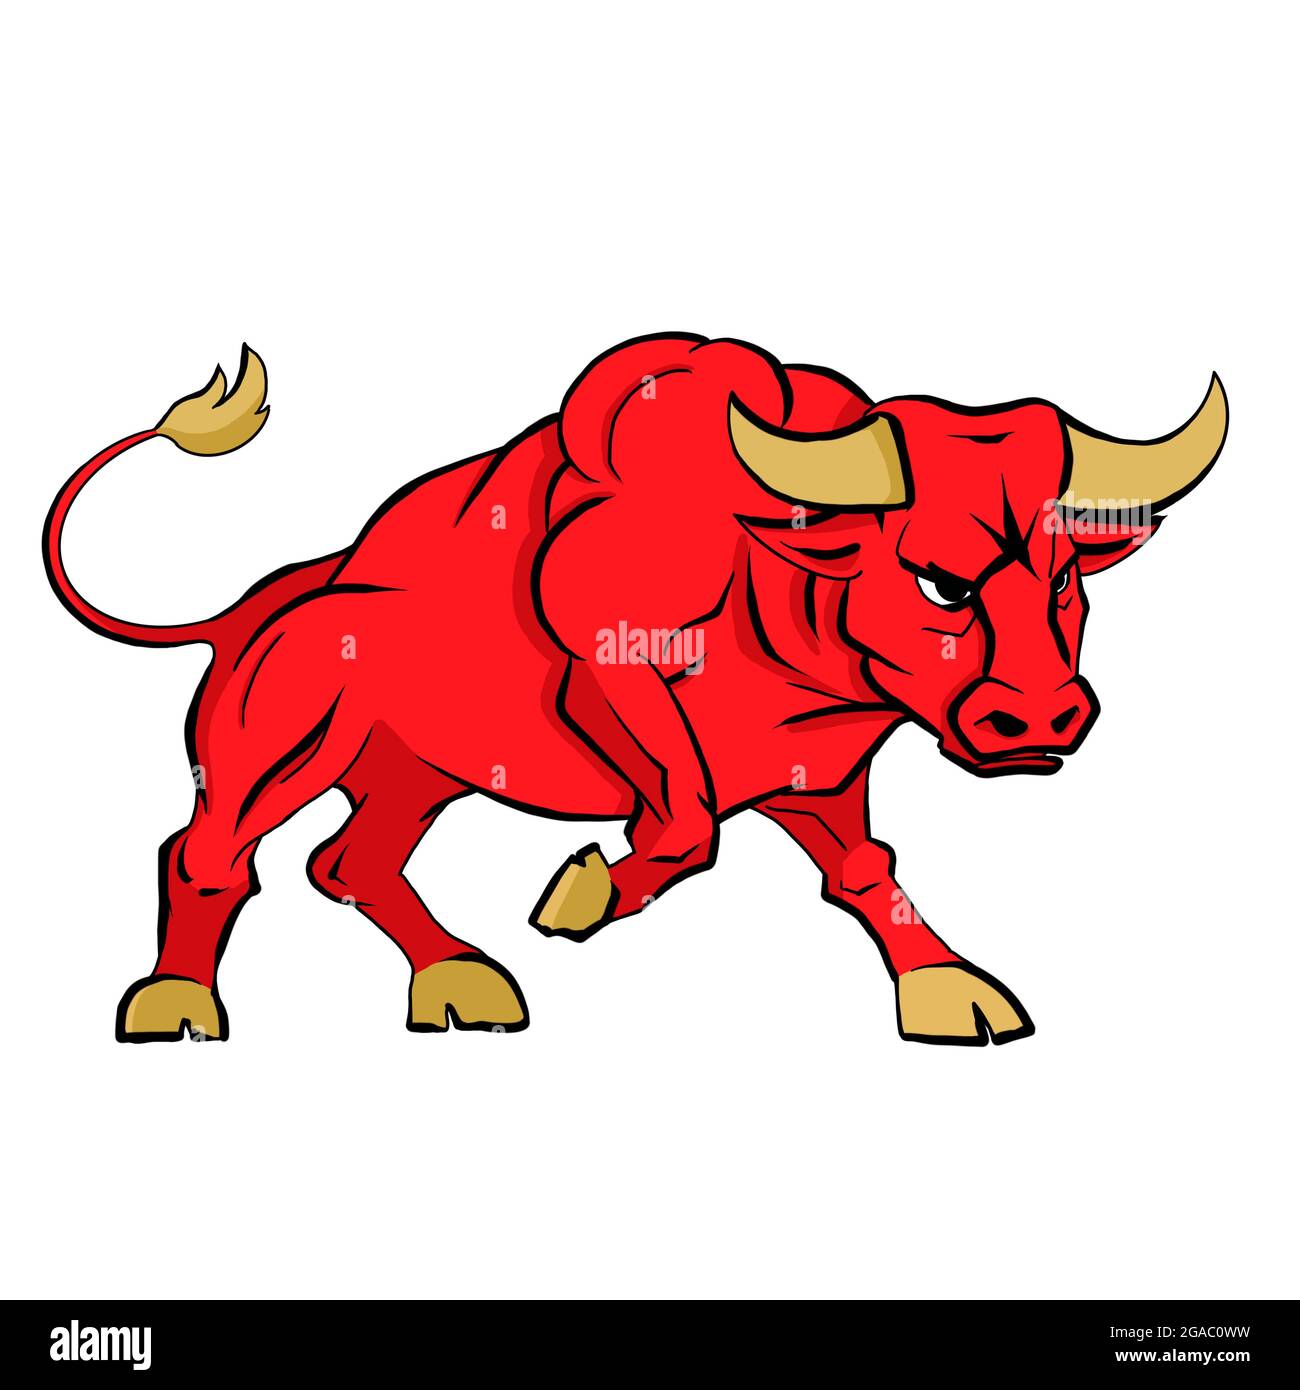 Red bull logo design. Angry bull character illustration Stock Photo